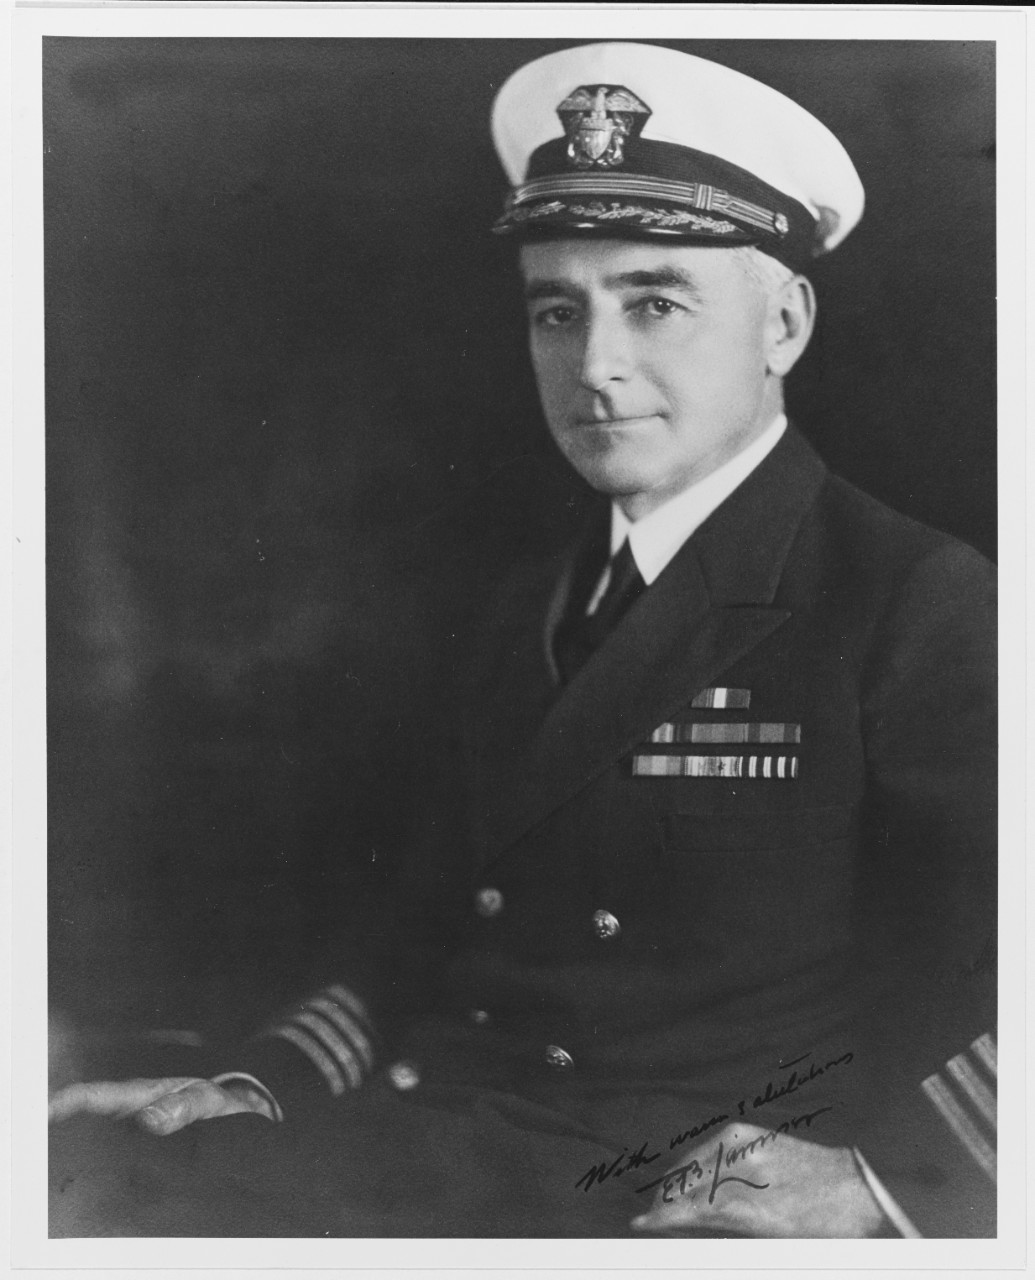 Captain Edgar B. Larimer, USN